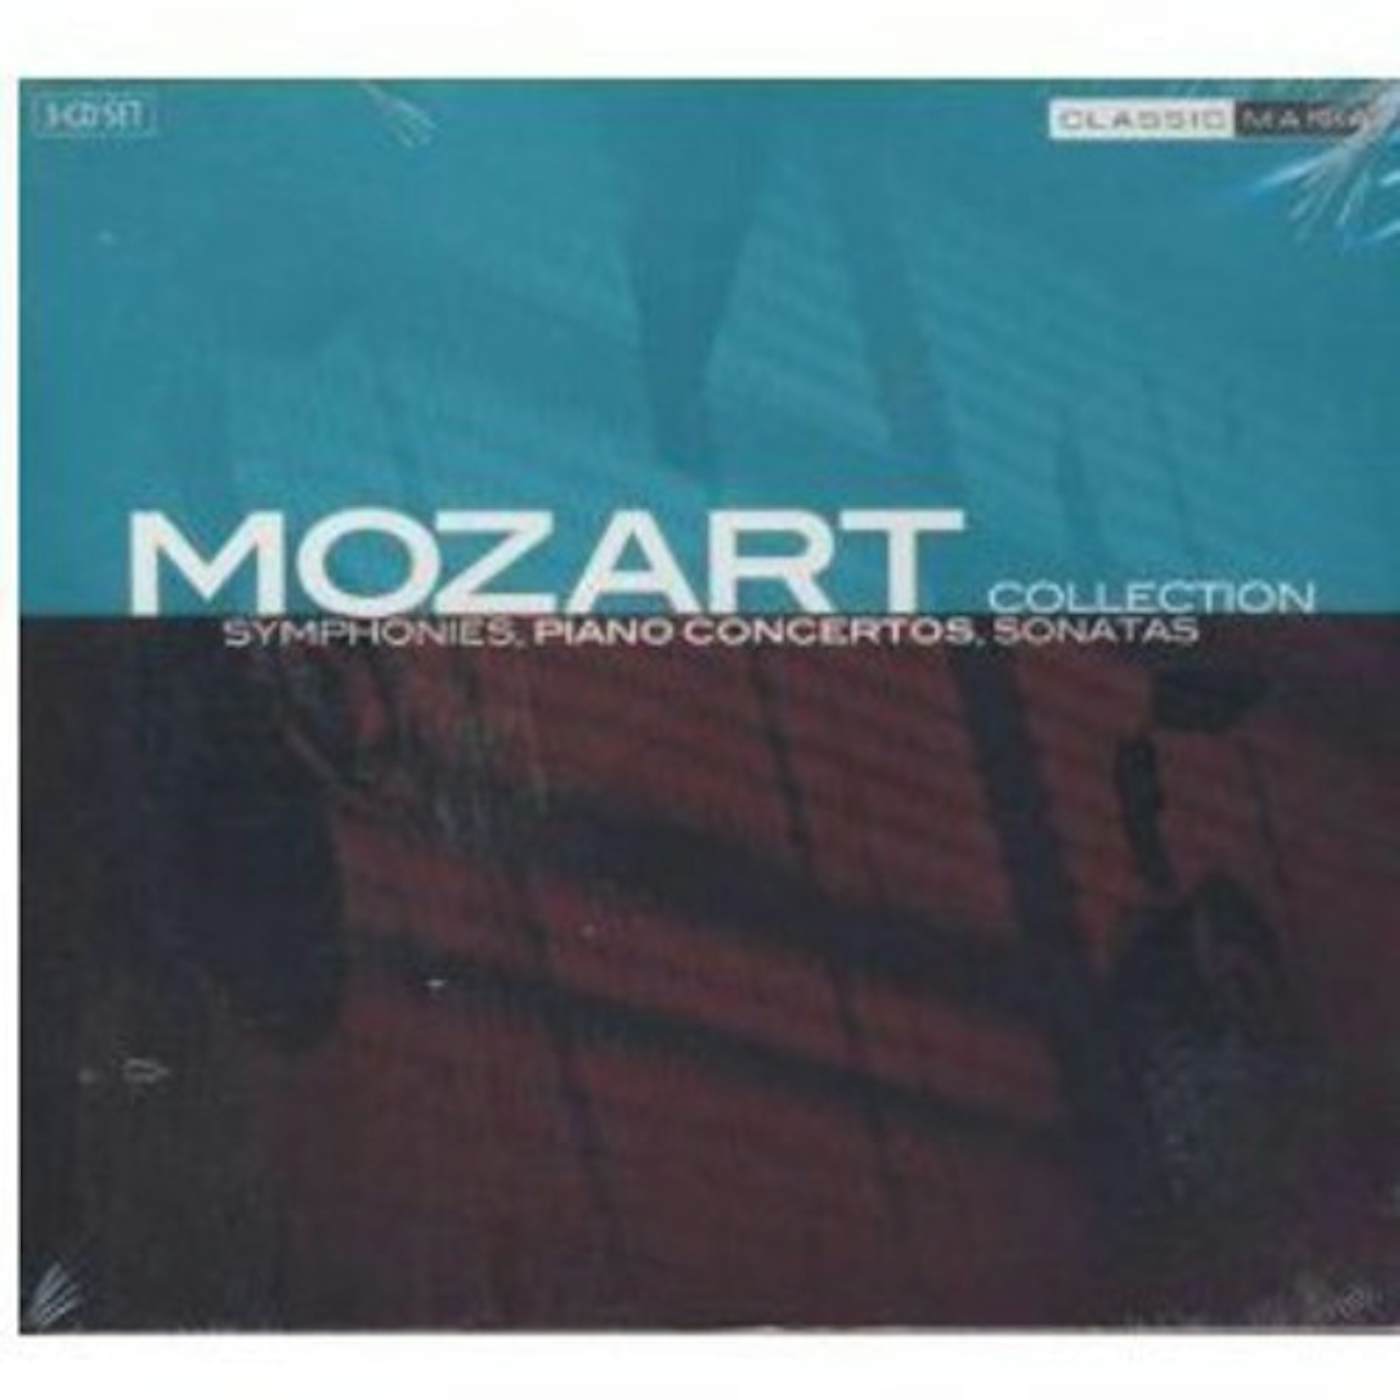 W.A. Mozart MOZART COLLECTION CD